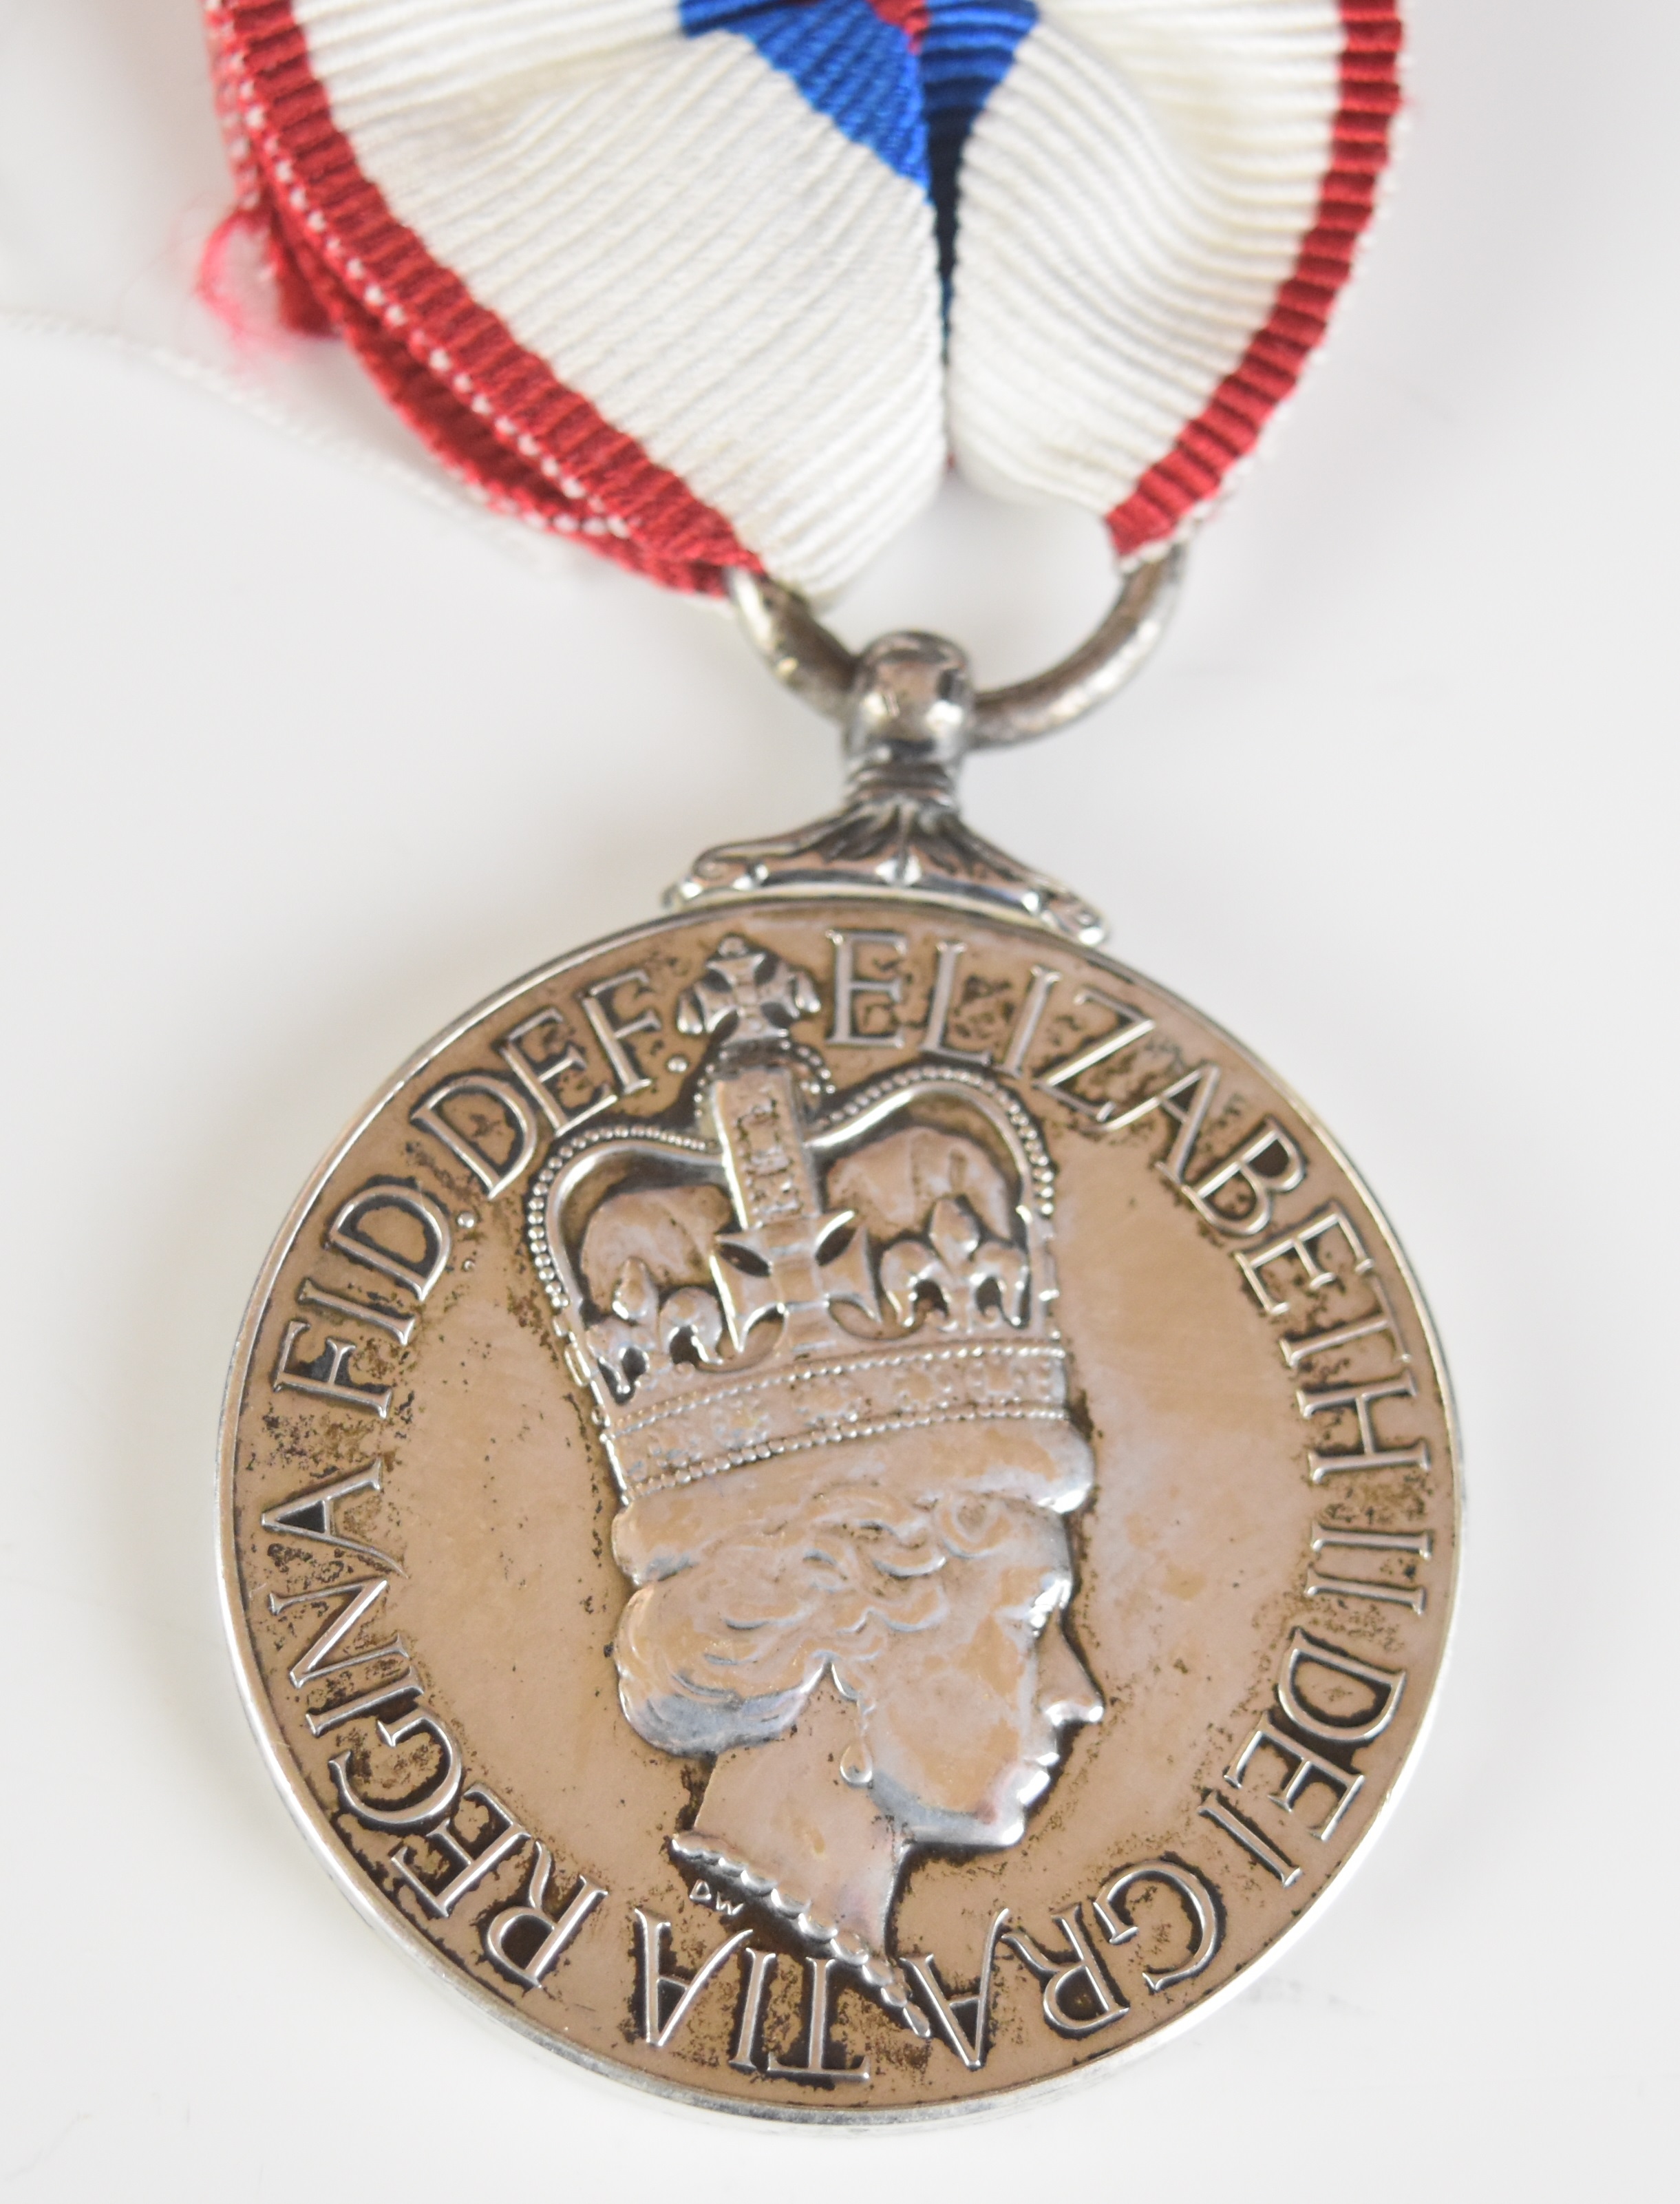 Elizabeth II Silver Jubilee Medal, Canadian issue - Image 3 of 4